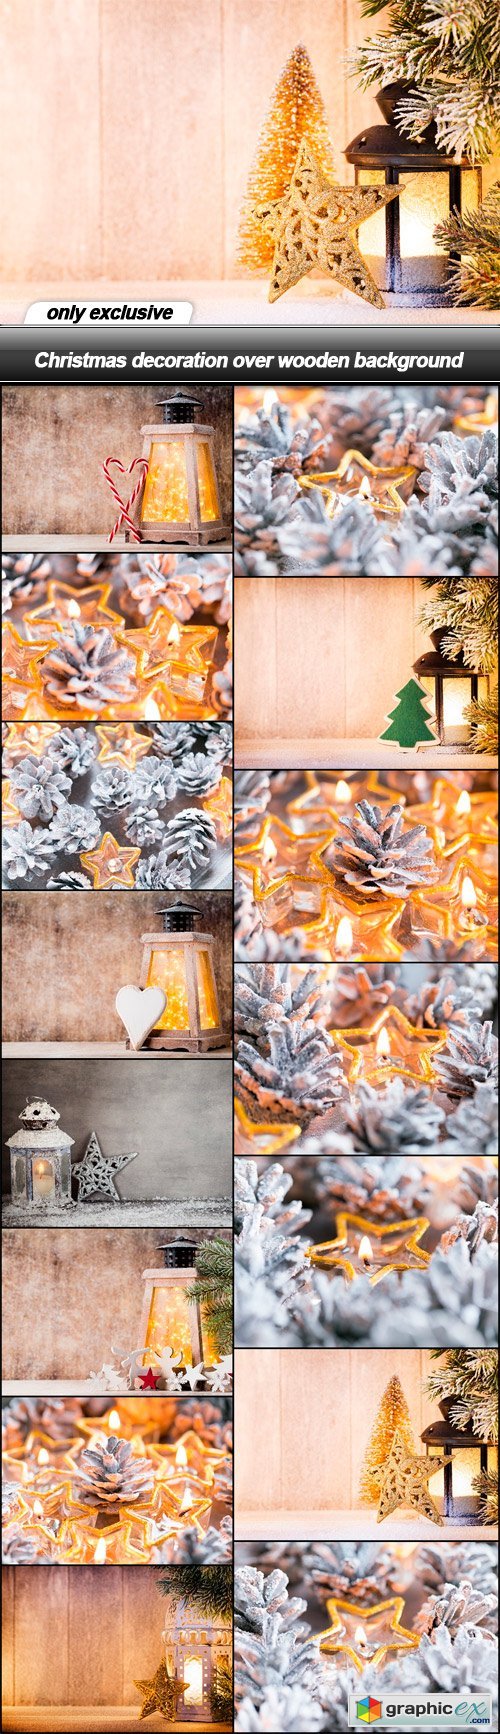 Christmas decoration over wooden background - 15 UHQ JPEG